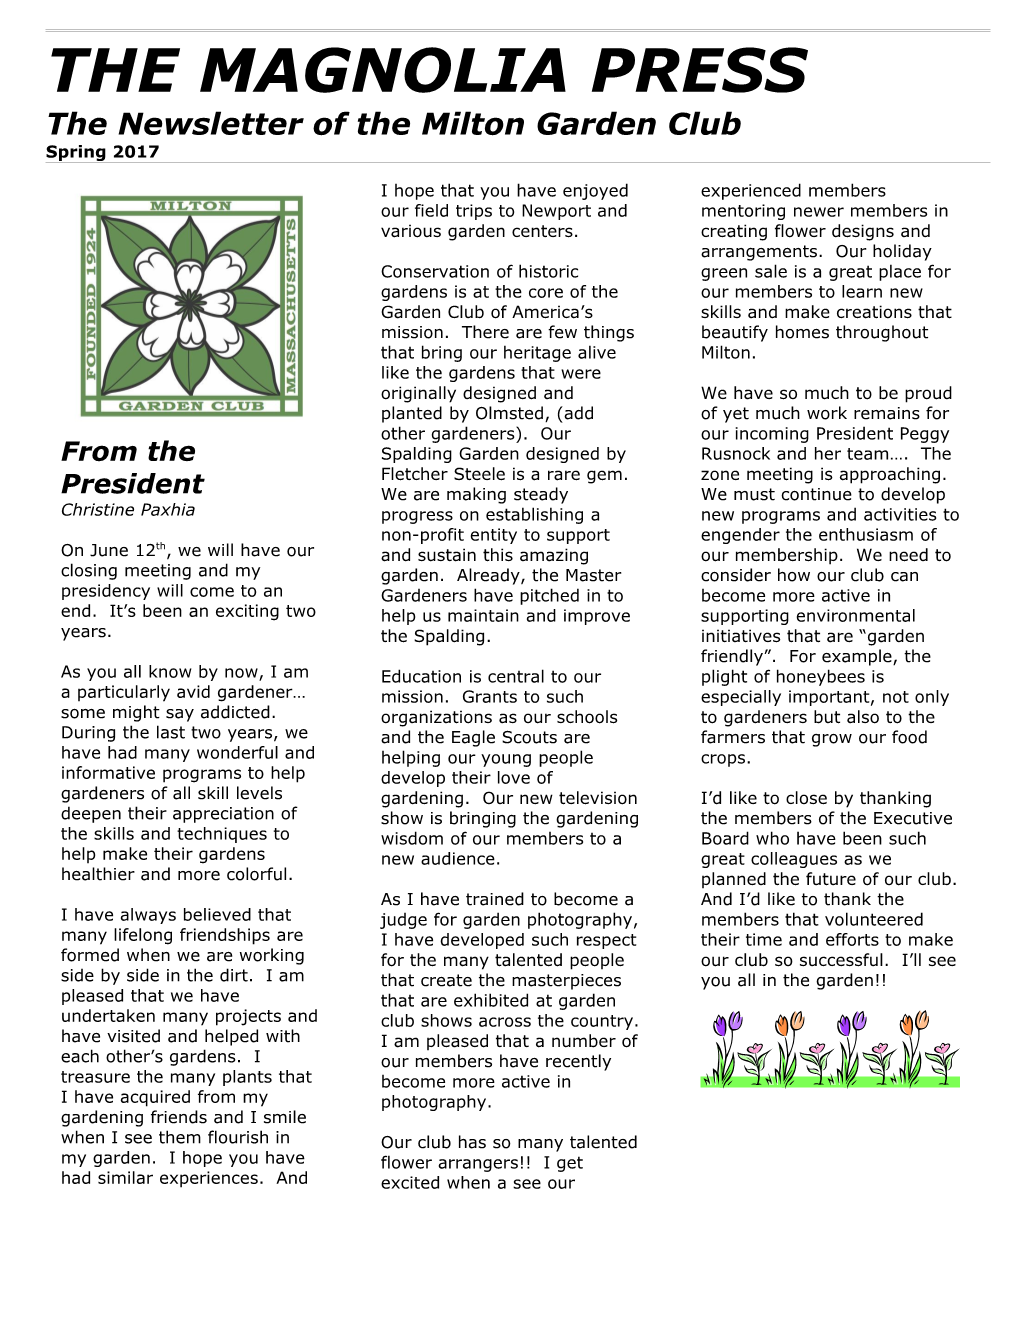 Milton Garden Club Newsletter May 2004 (B0288356;1)